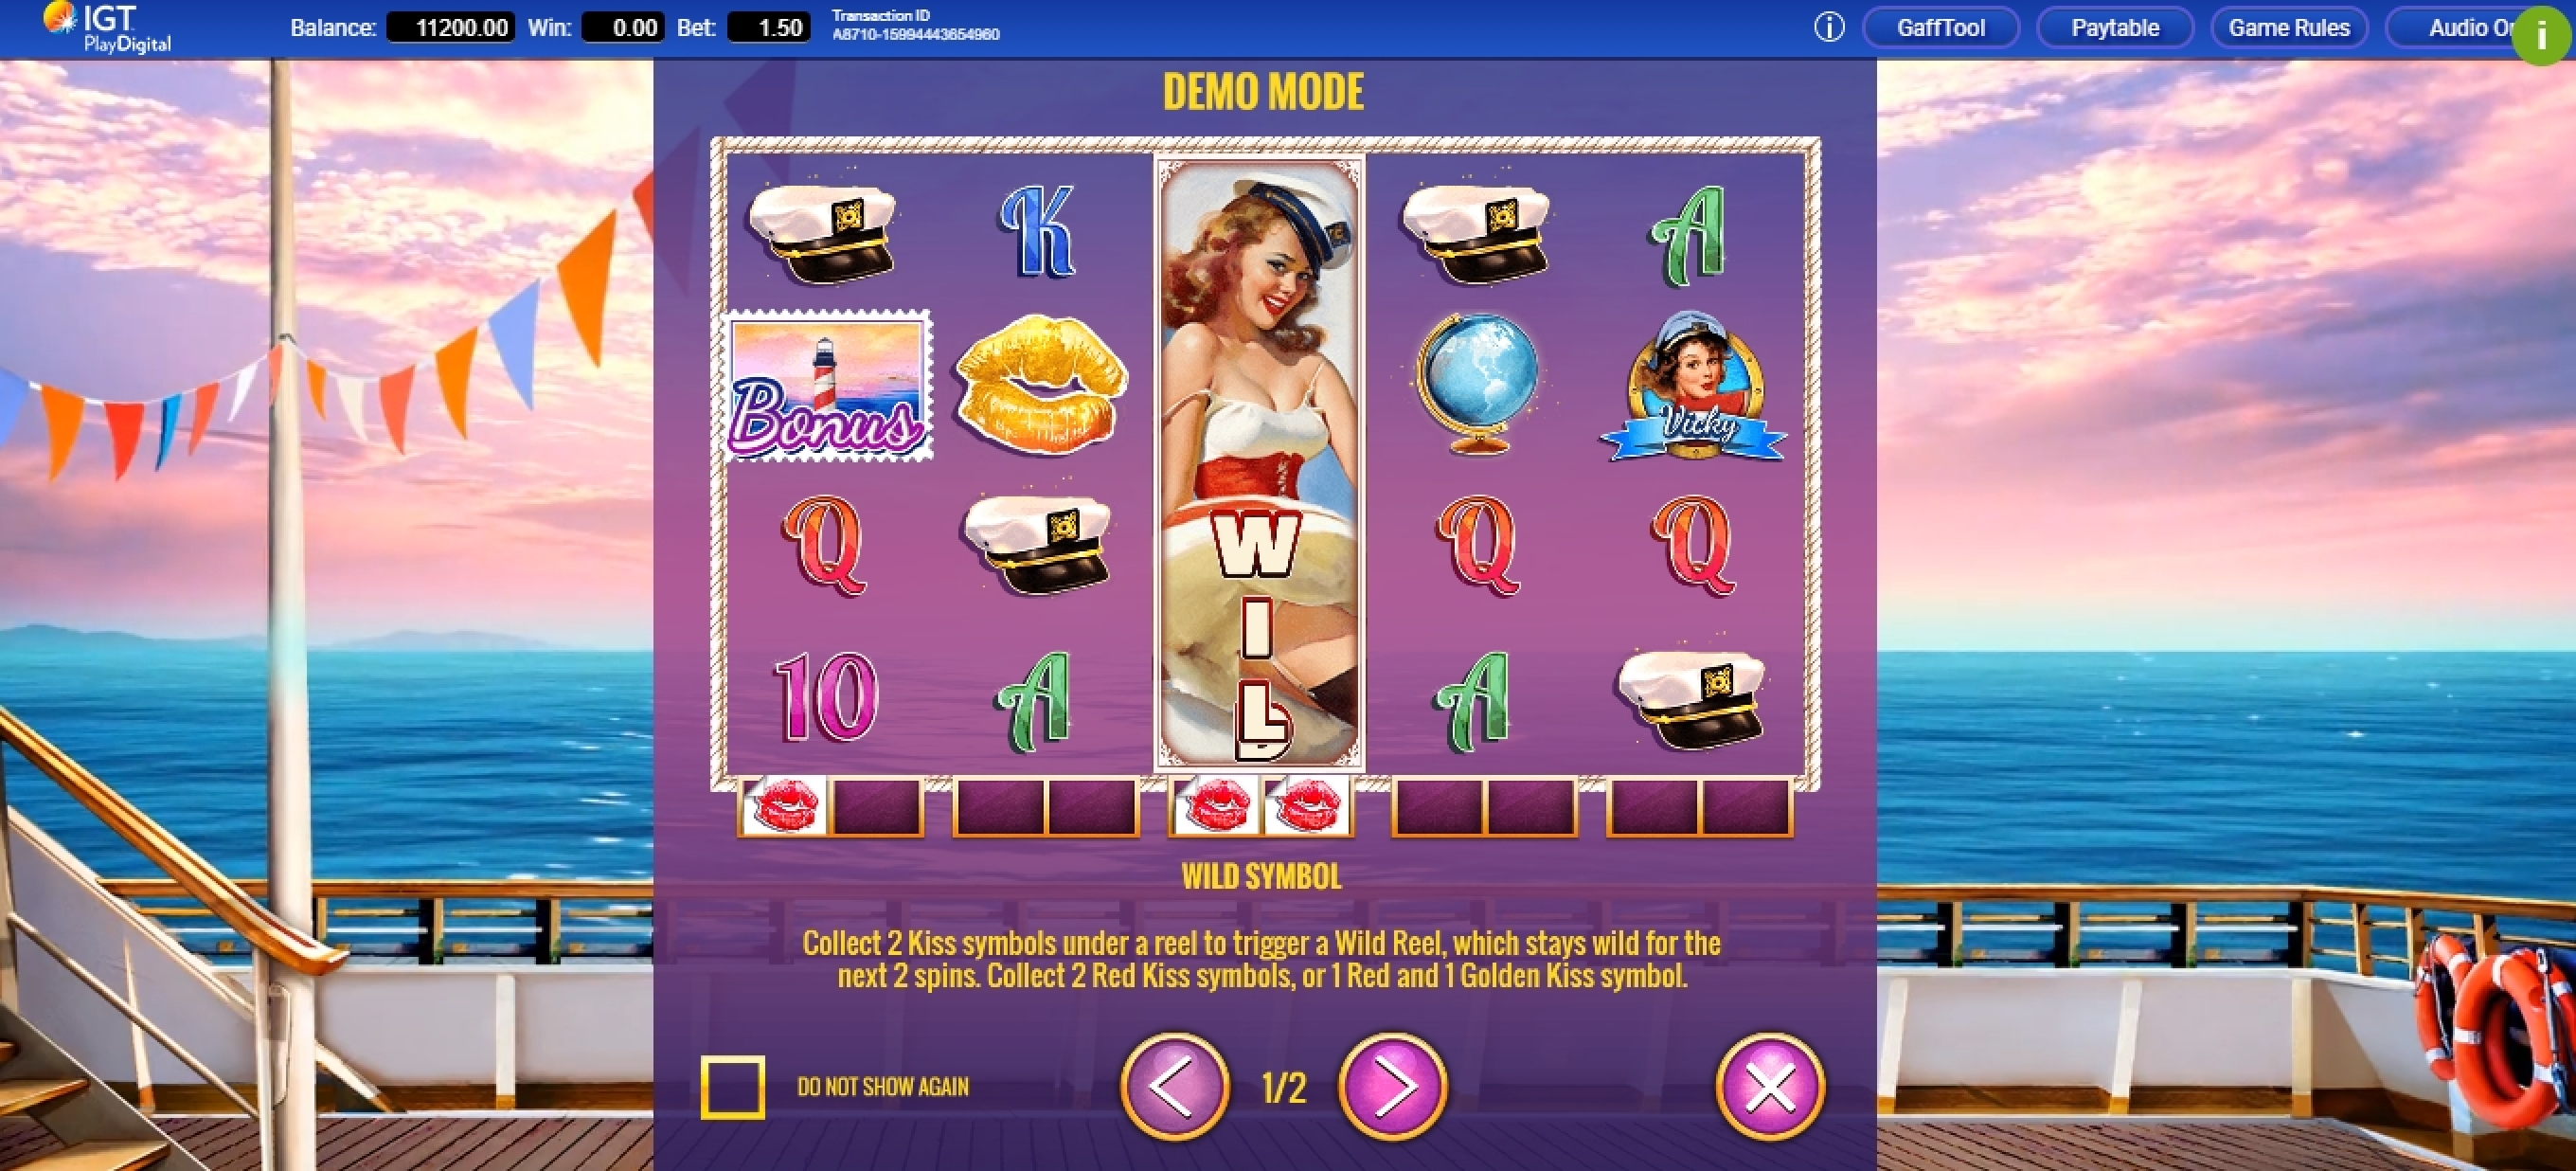 Play Megajackpots Ocean Belles Free Casino Slot Game by IGT